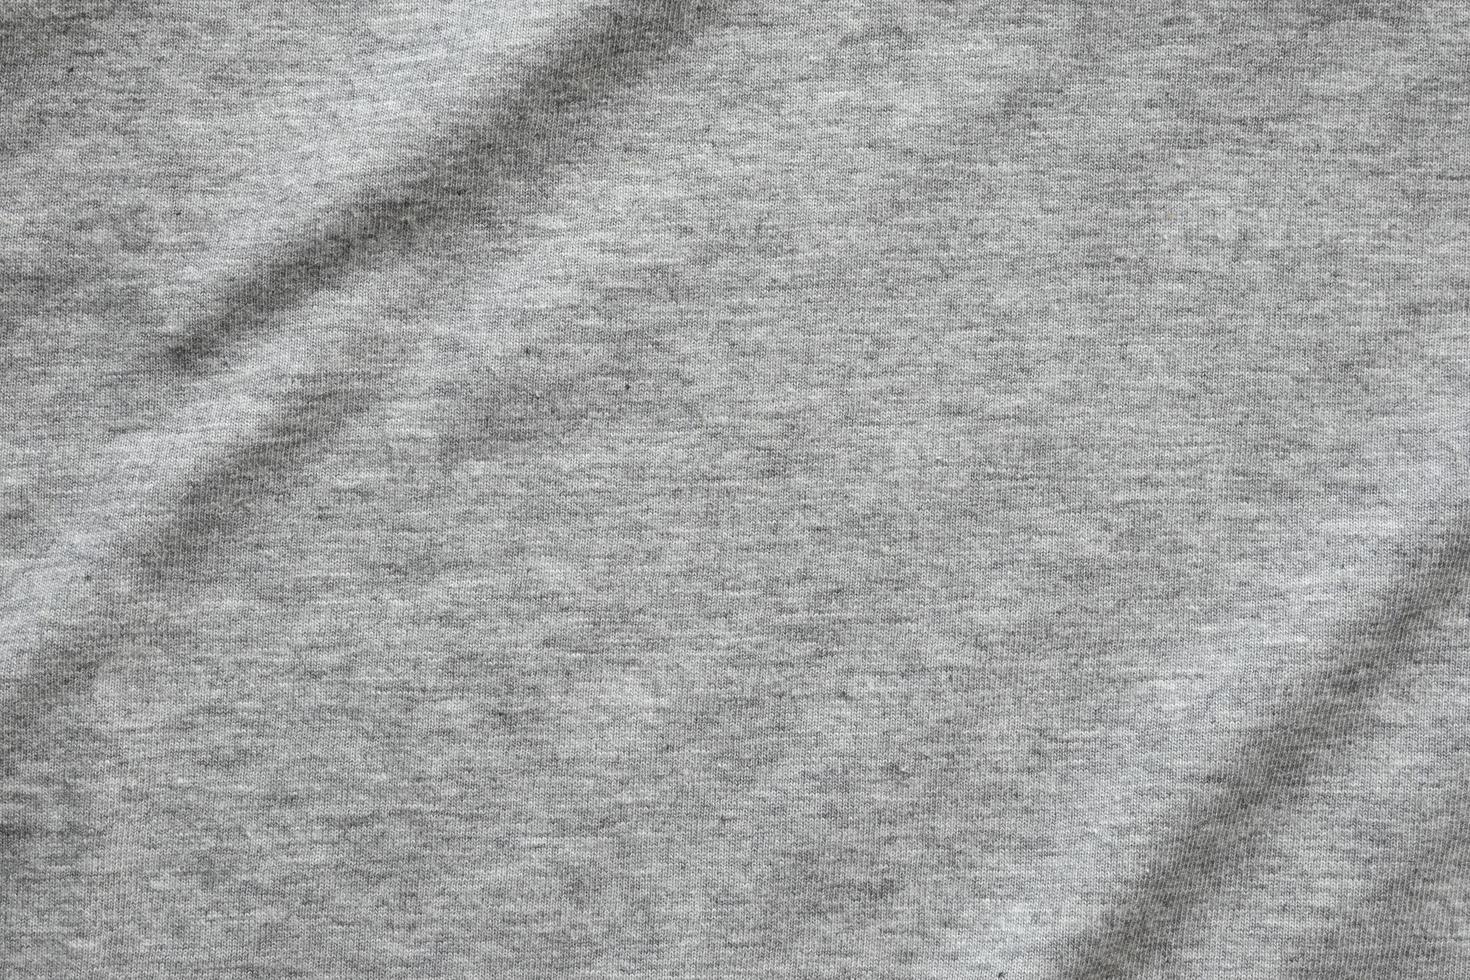 gray shirt fabric texture background 12886760 Stock Photo at Vecteezy